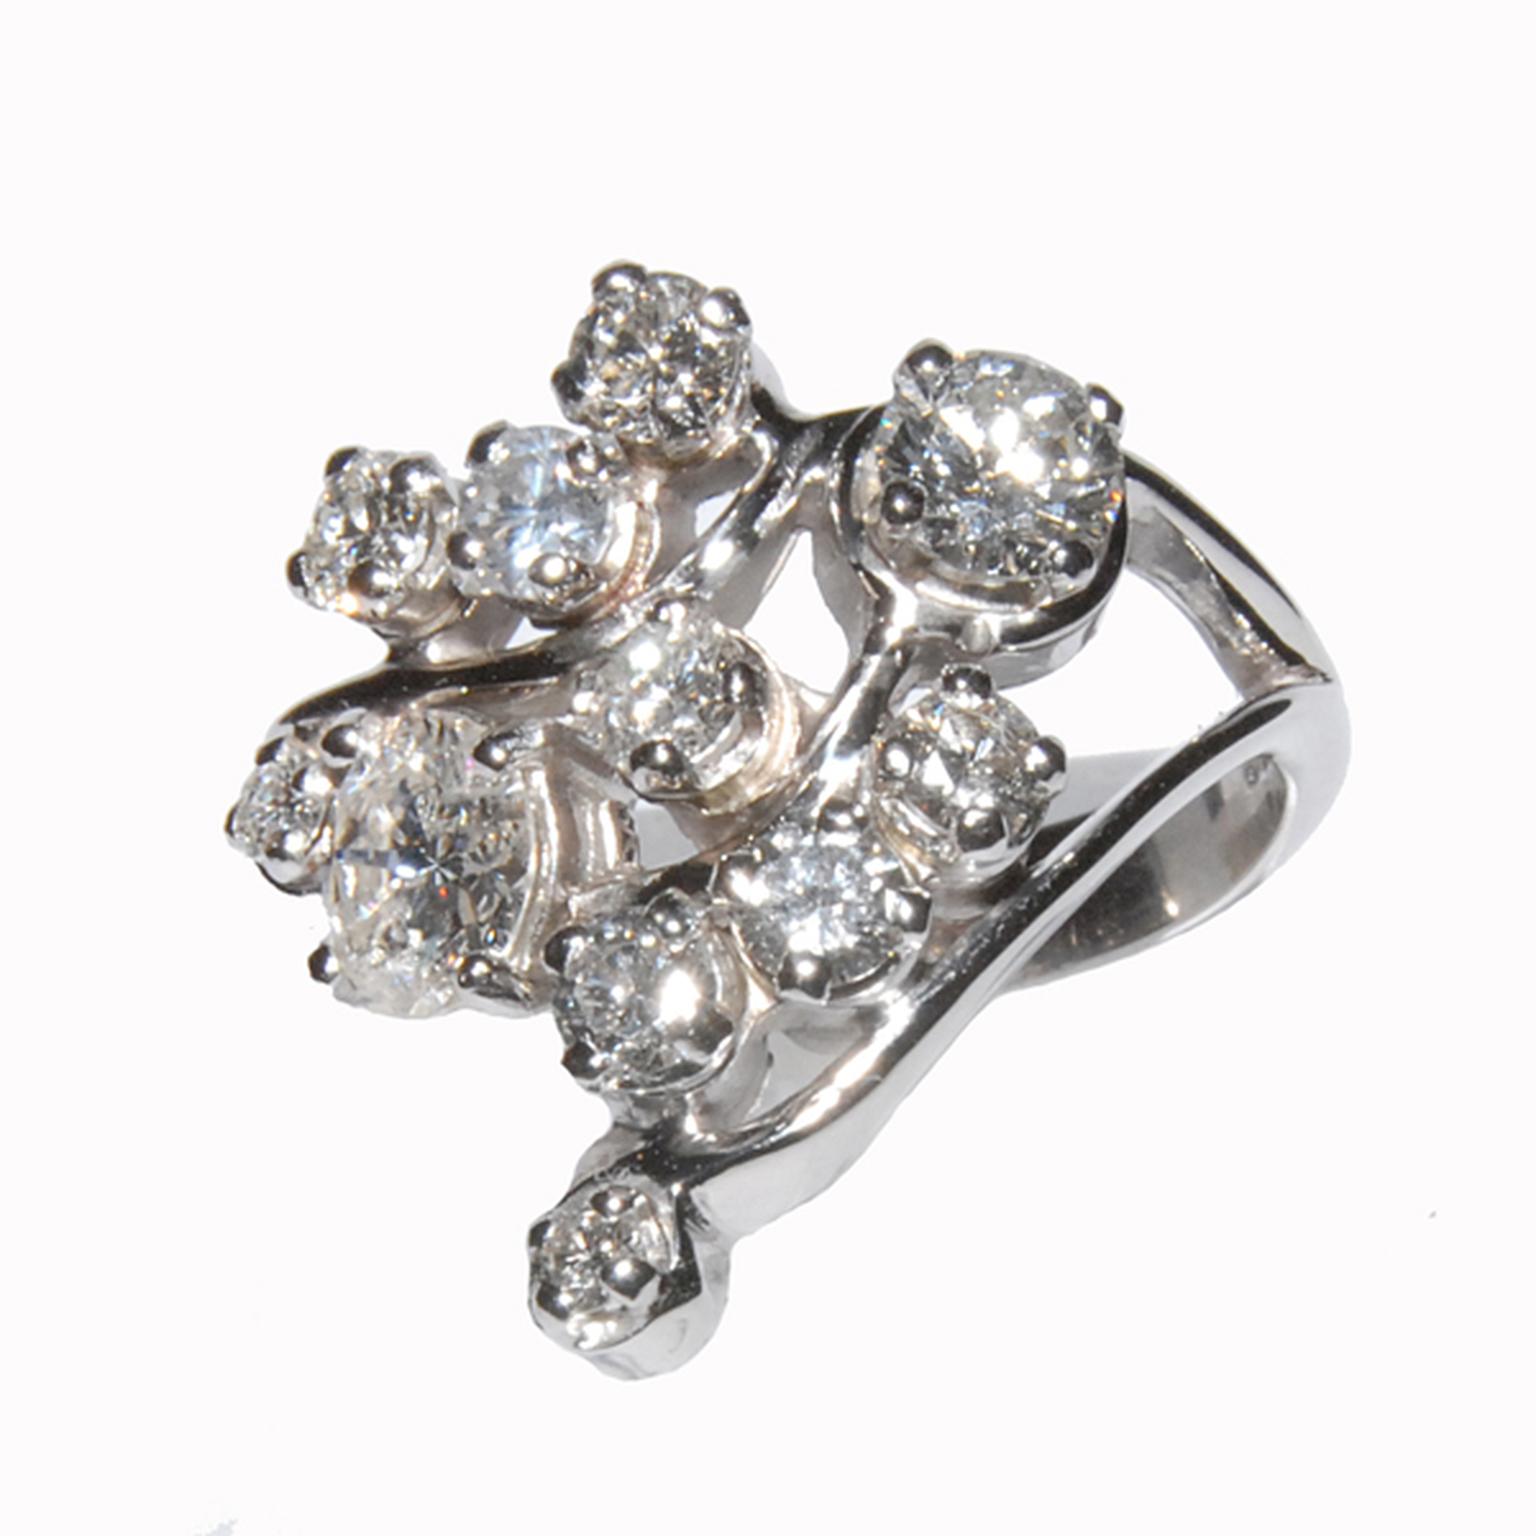 Keith Gordon engagement ring bursting with brilliant-cut diamonds.